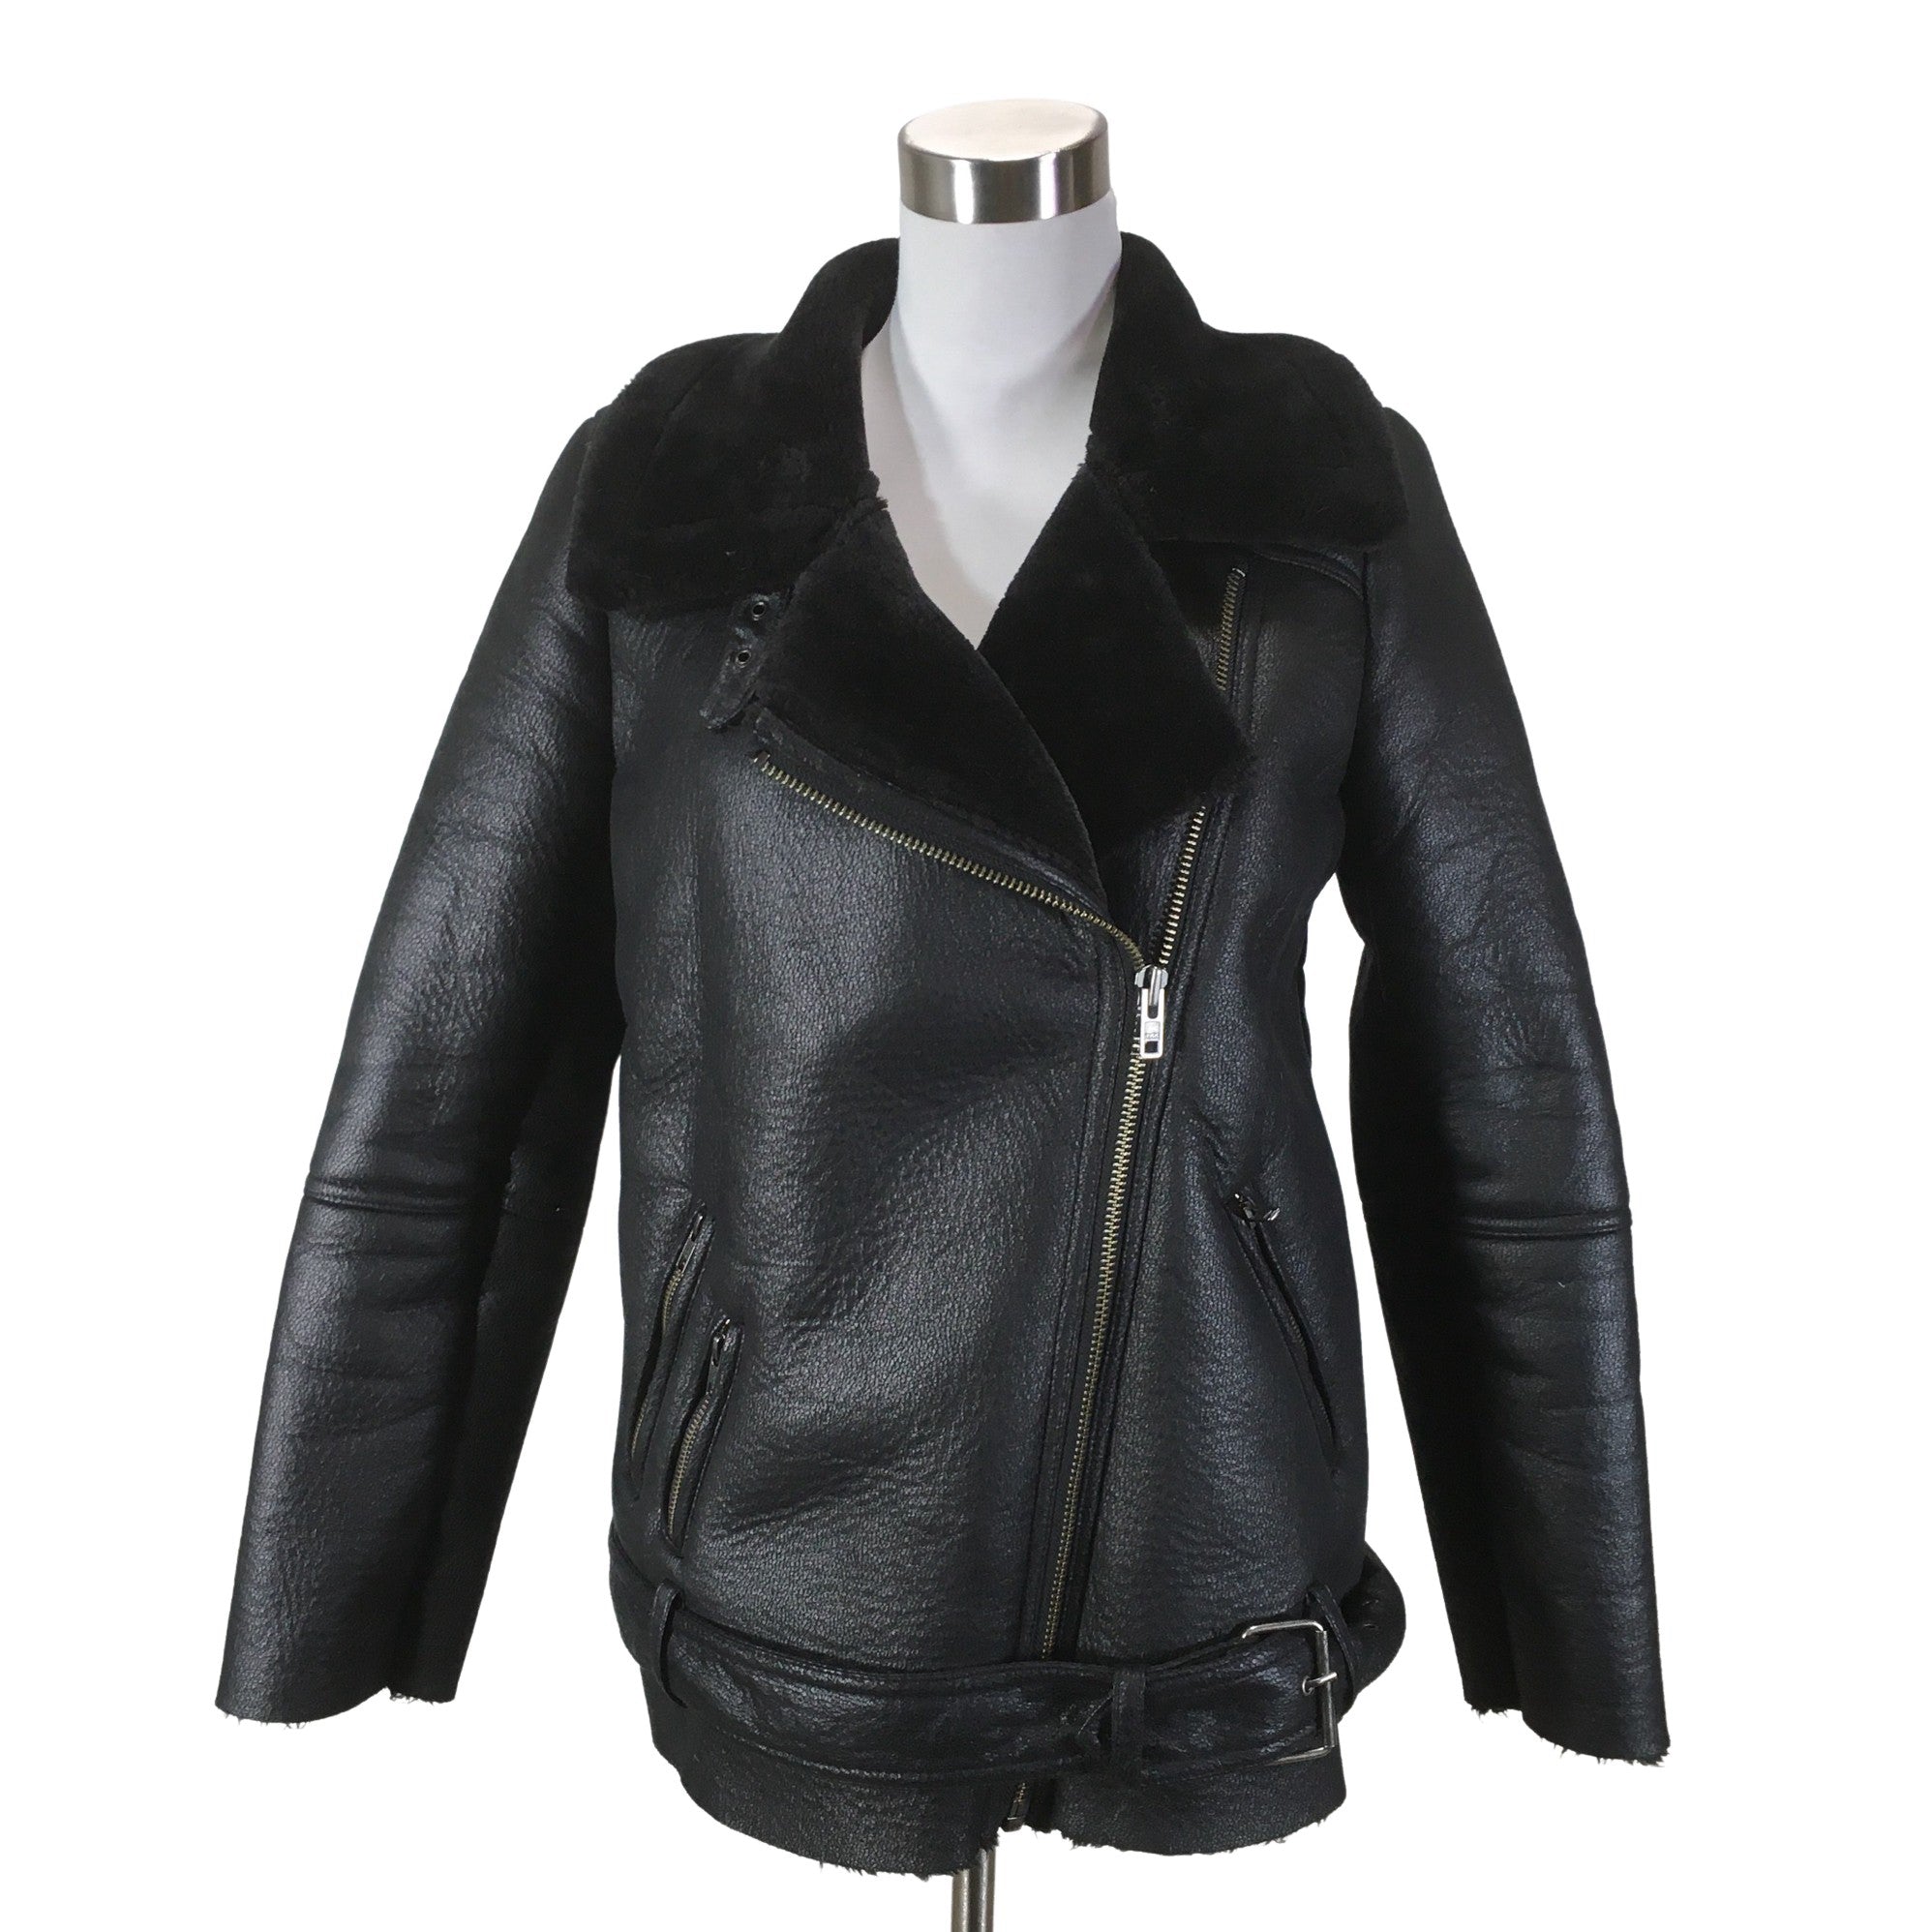 Women's Minimum Leather size 36 (Black)